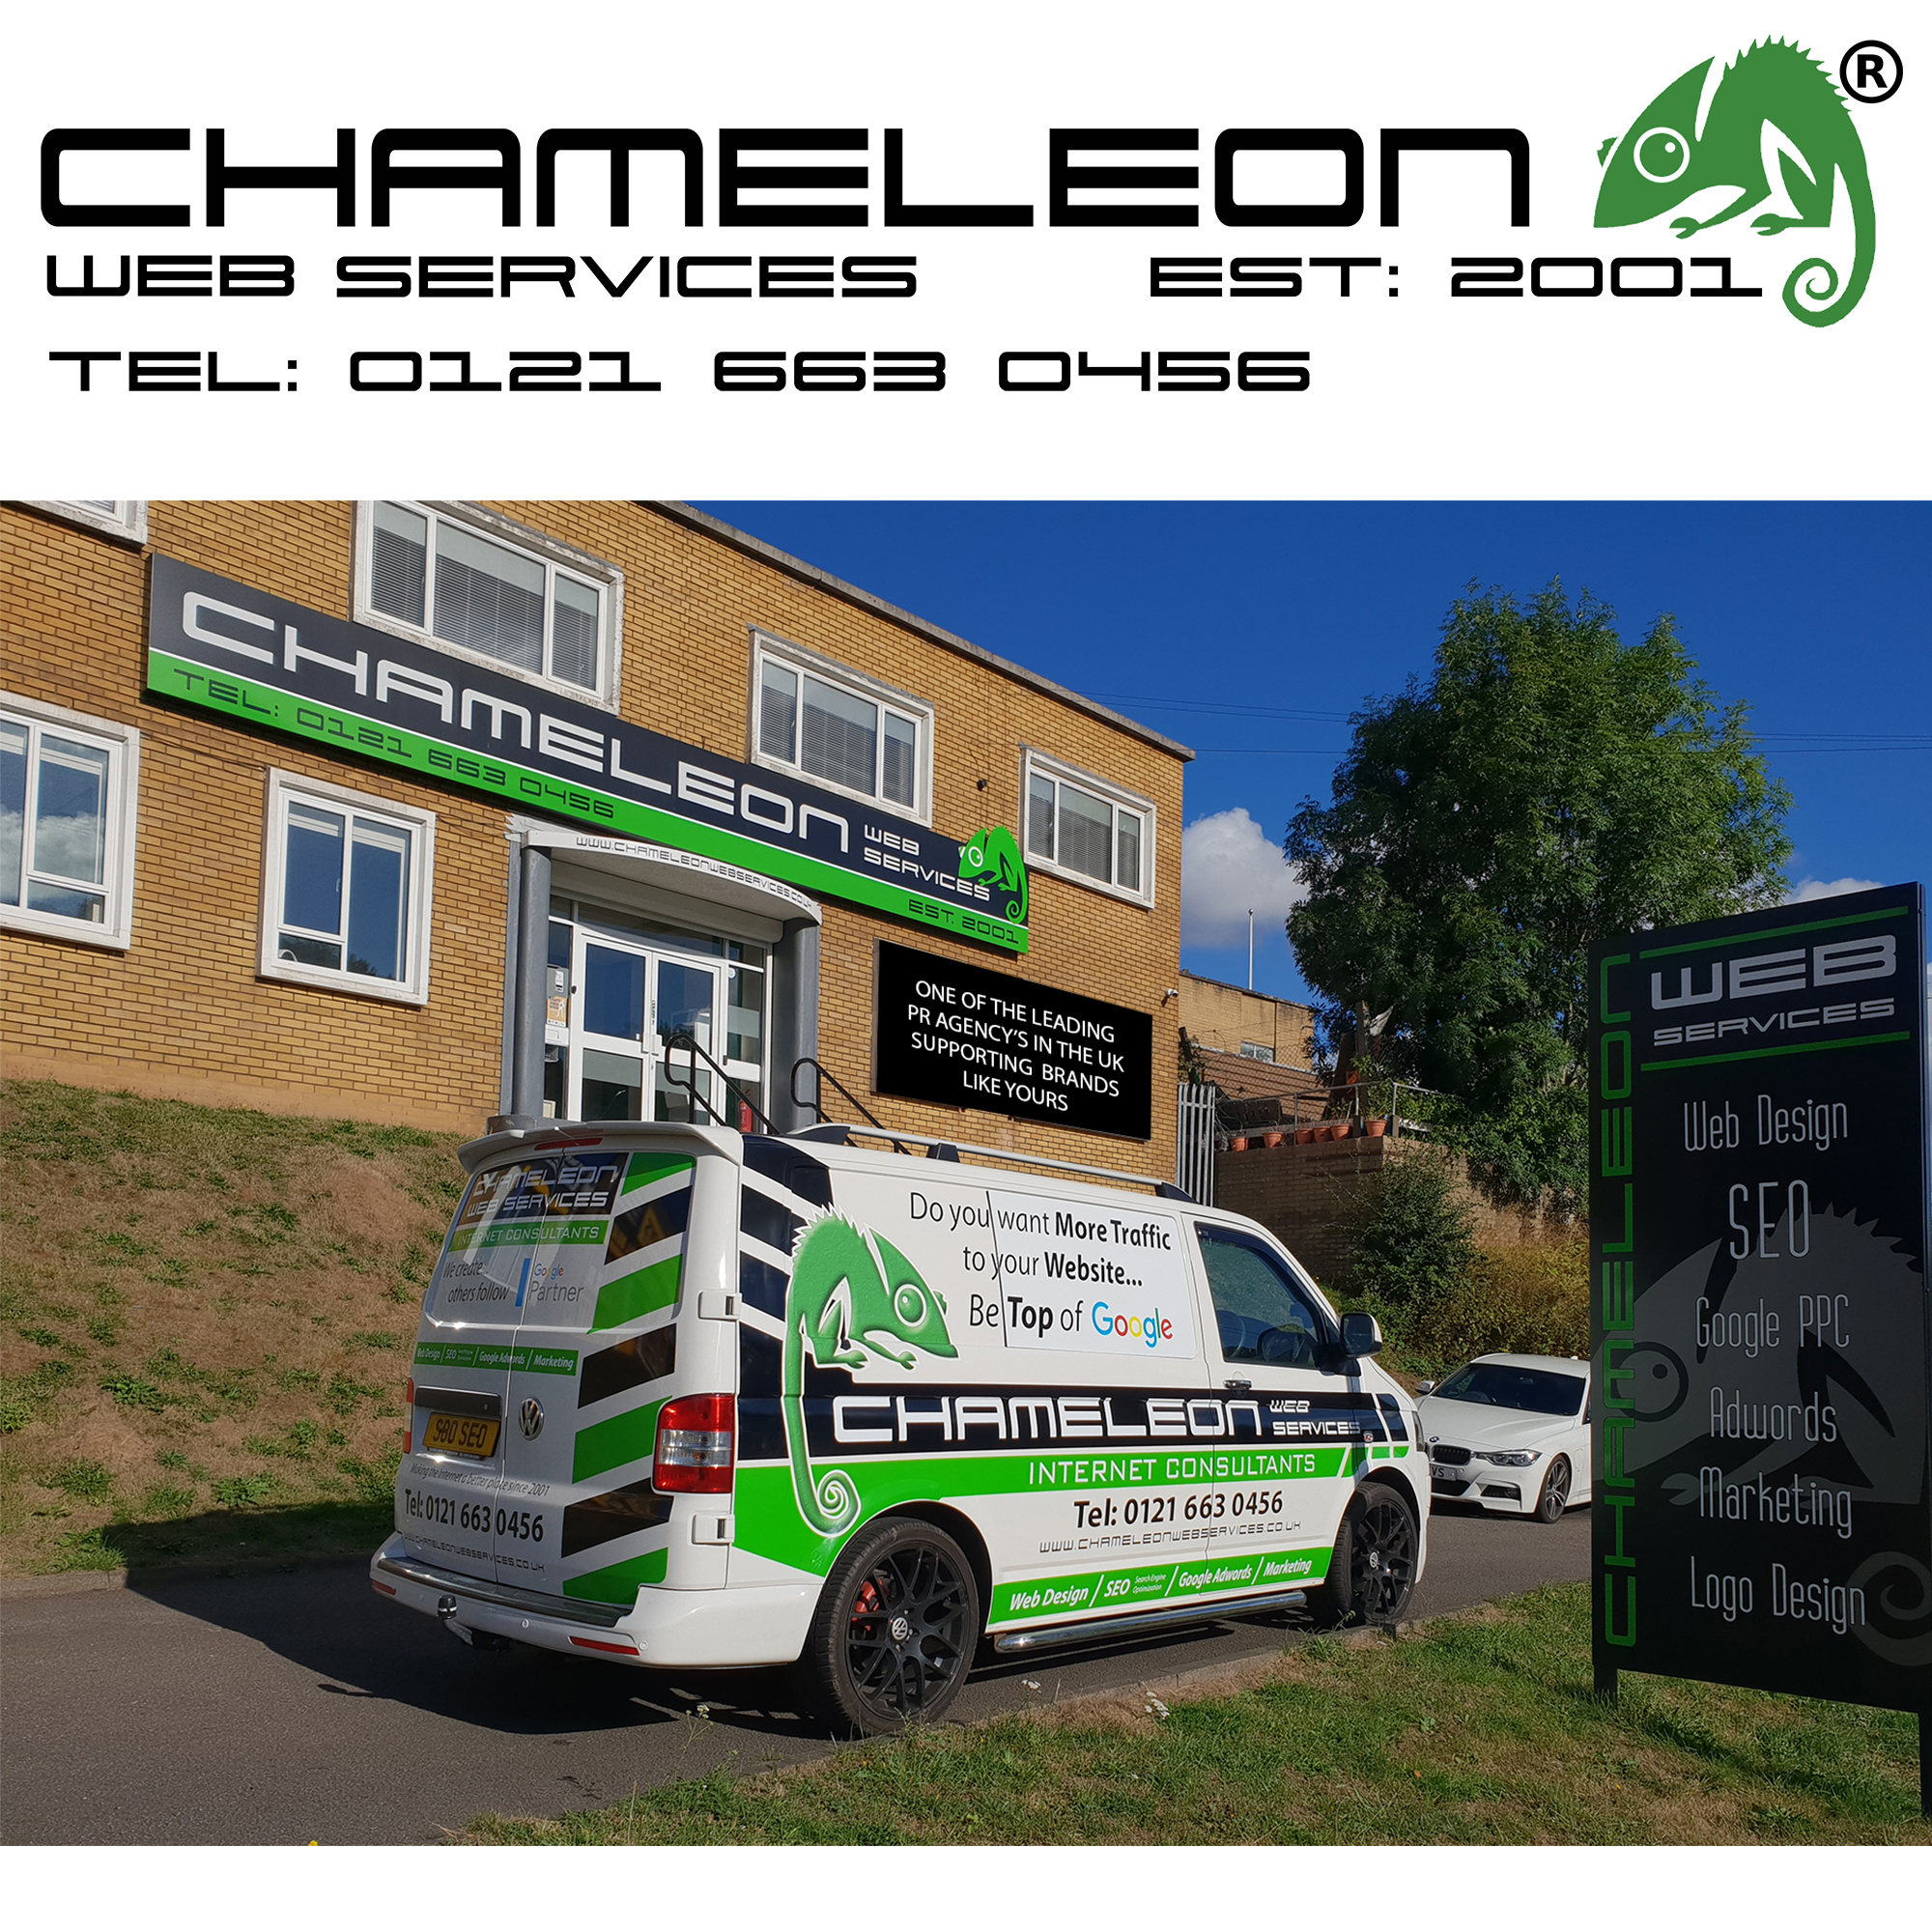 www.chameleonwebservices.co.uk